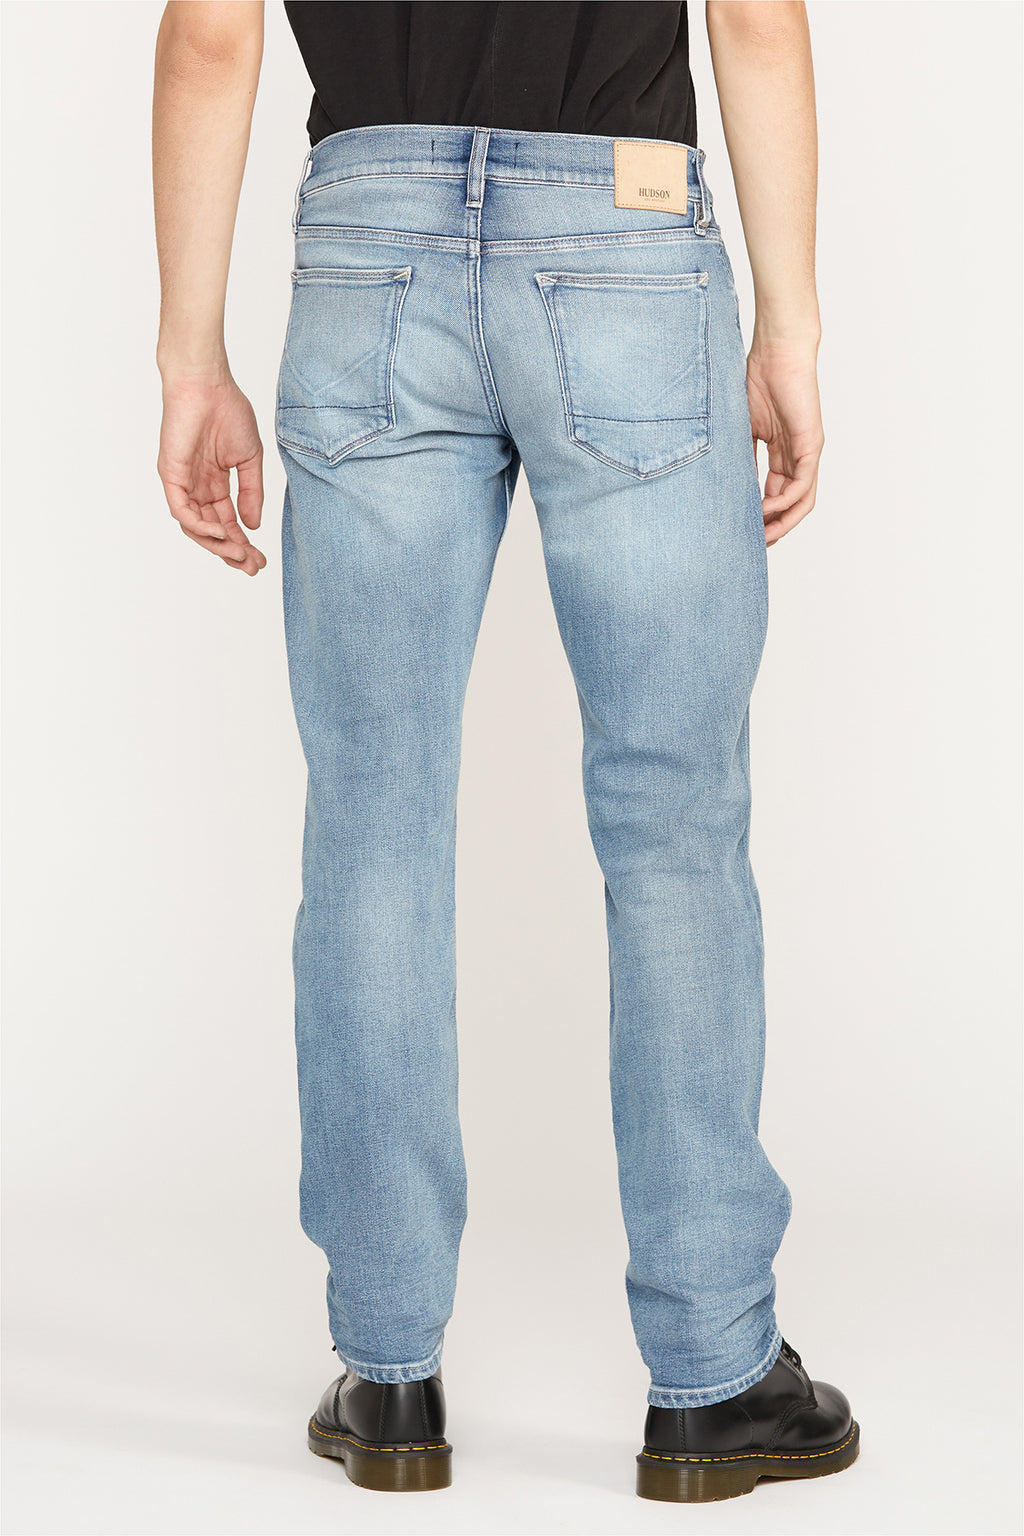 Men's New Arrivals – Hudson Jeans